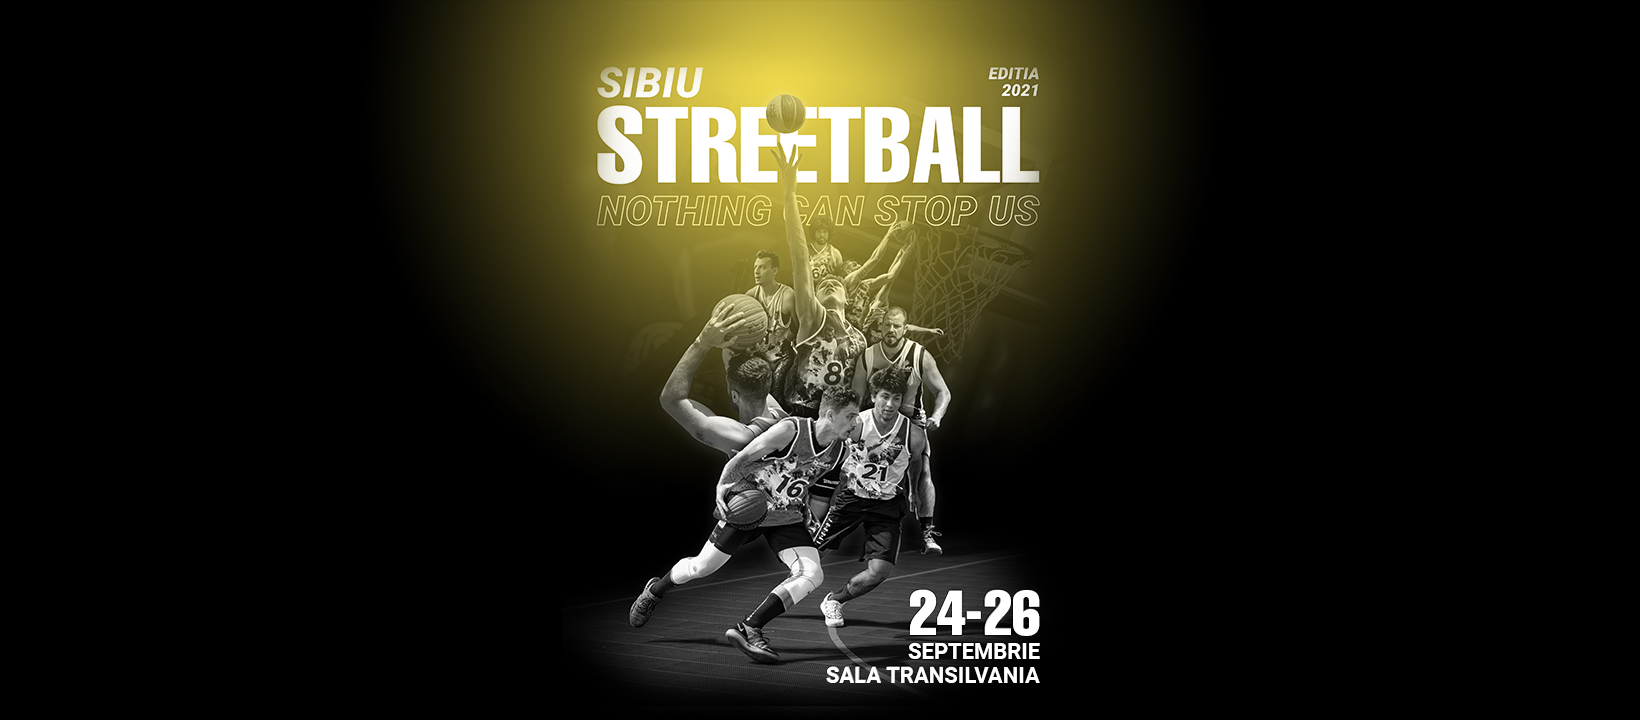 Sibiu Streetbal 2021 - Nothing can stop us!